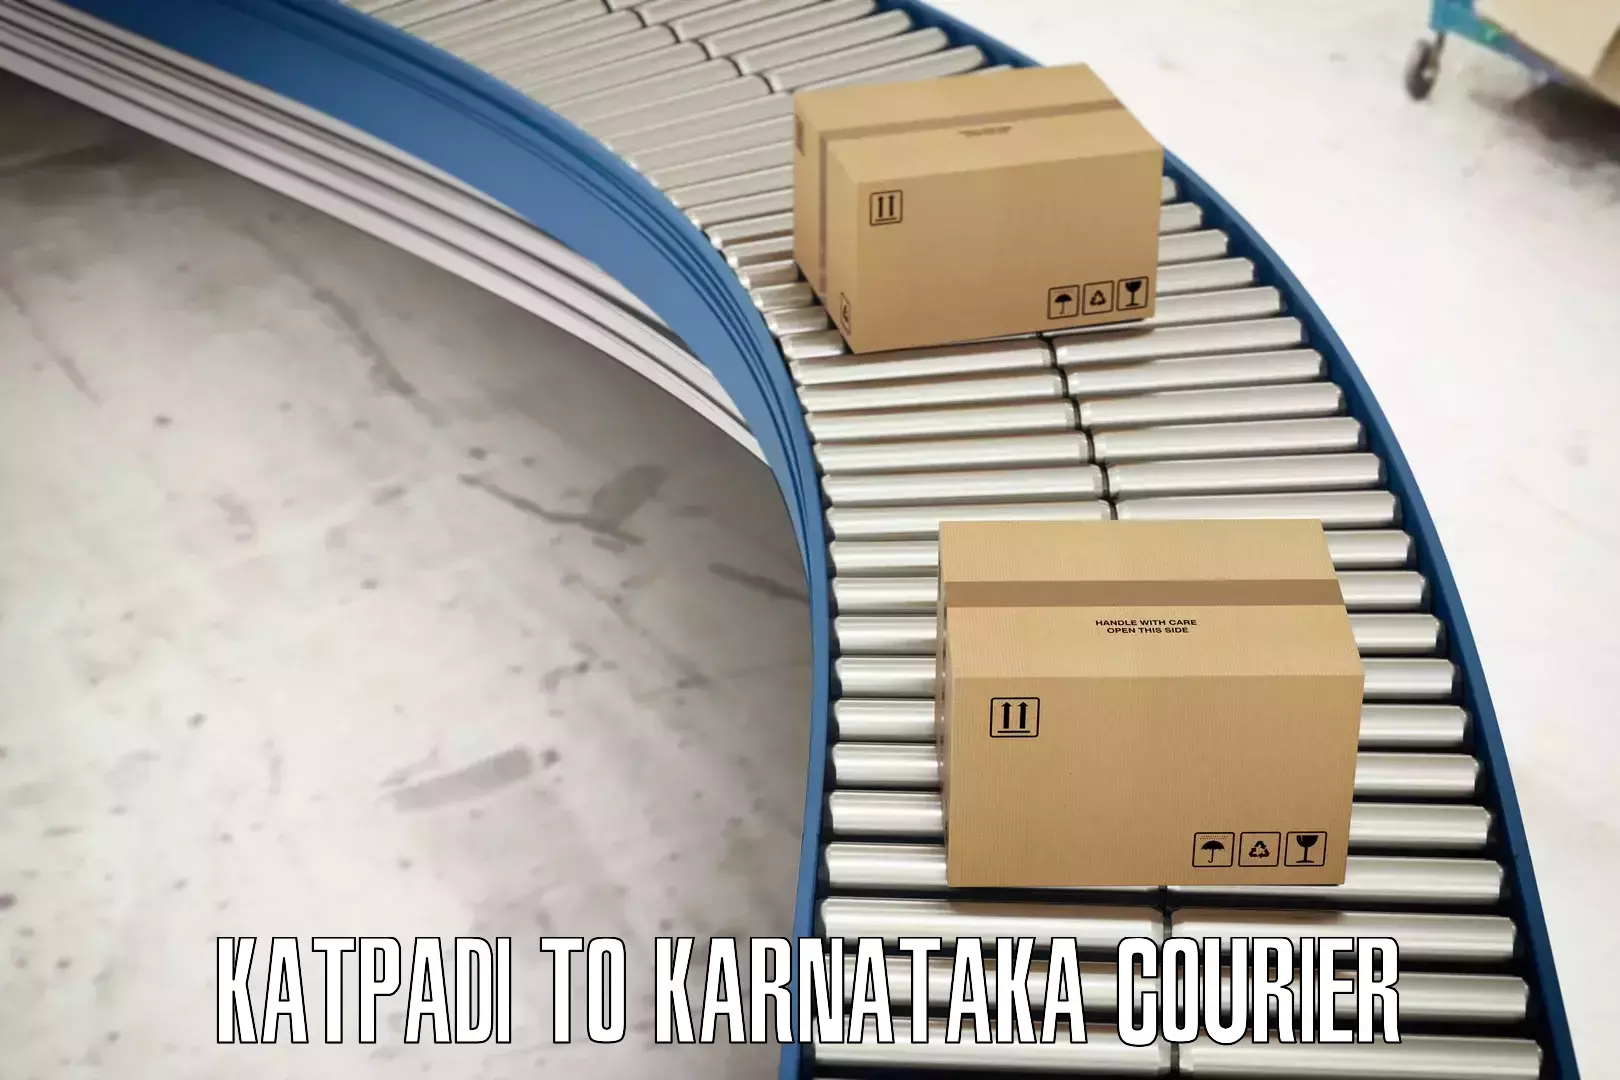 On-demand delivery Katpadi to Harugeri